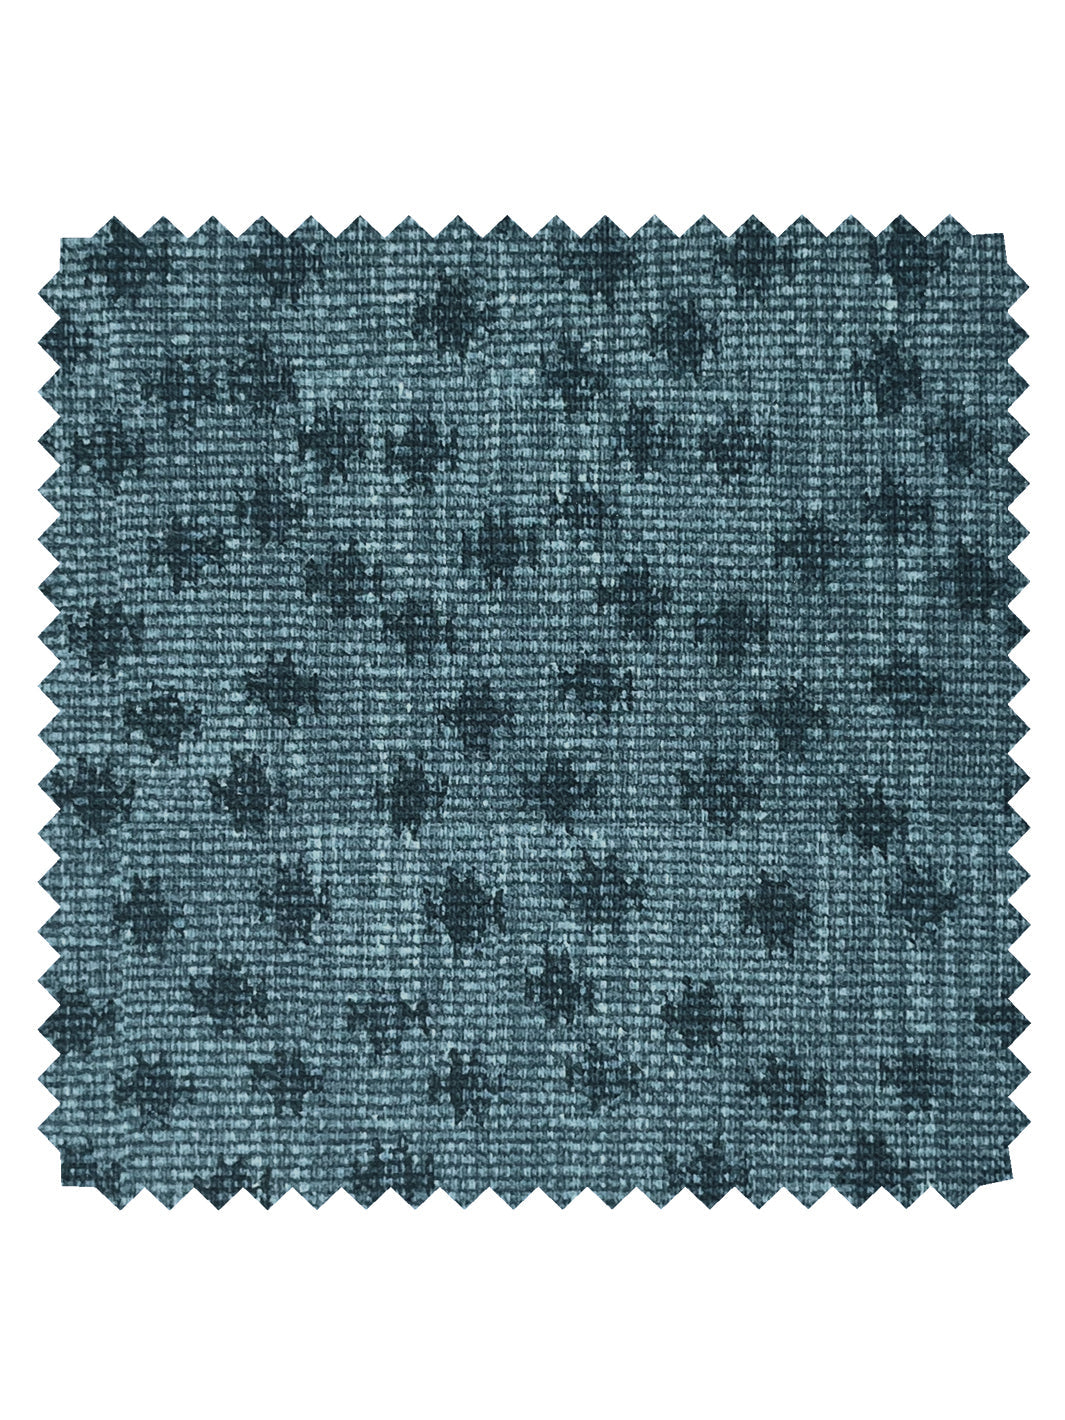 'Northstar Star' Linen Fabric by Nathan Turner - Dark Blue